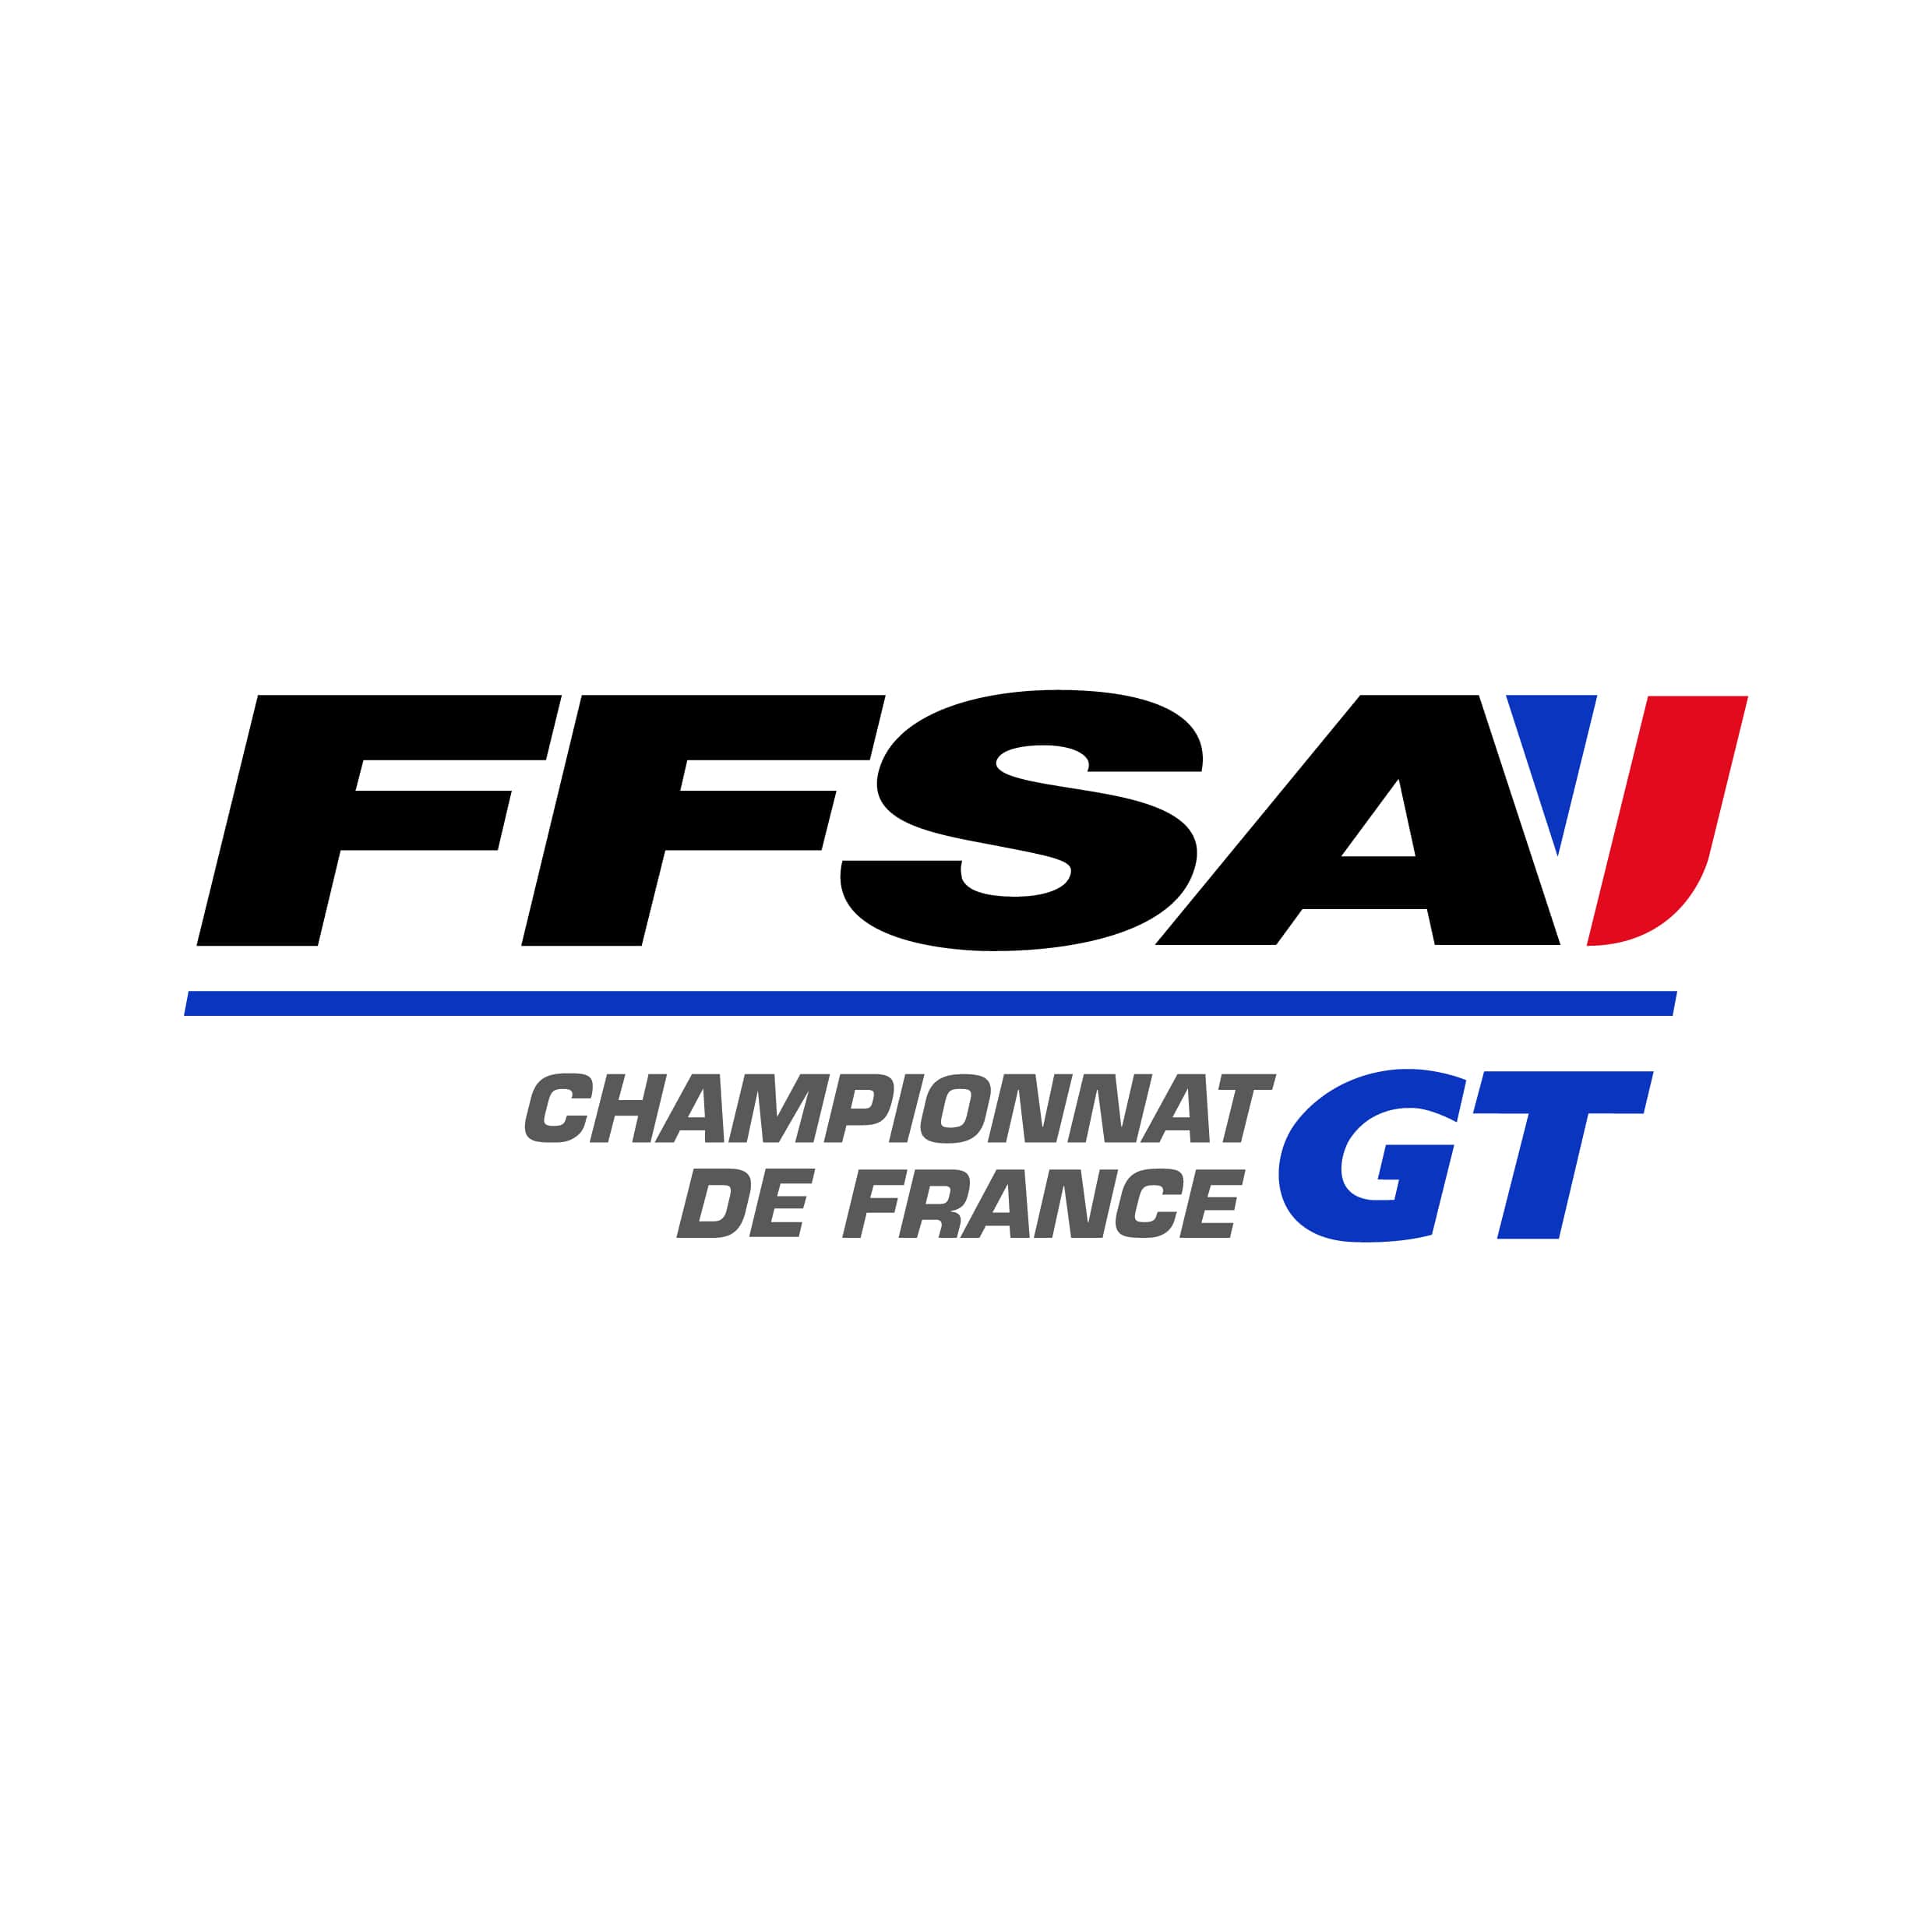 STICKERS FFSA CHAMPIONNAT FRANCE GT LOGO